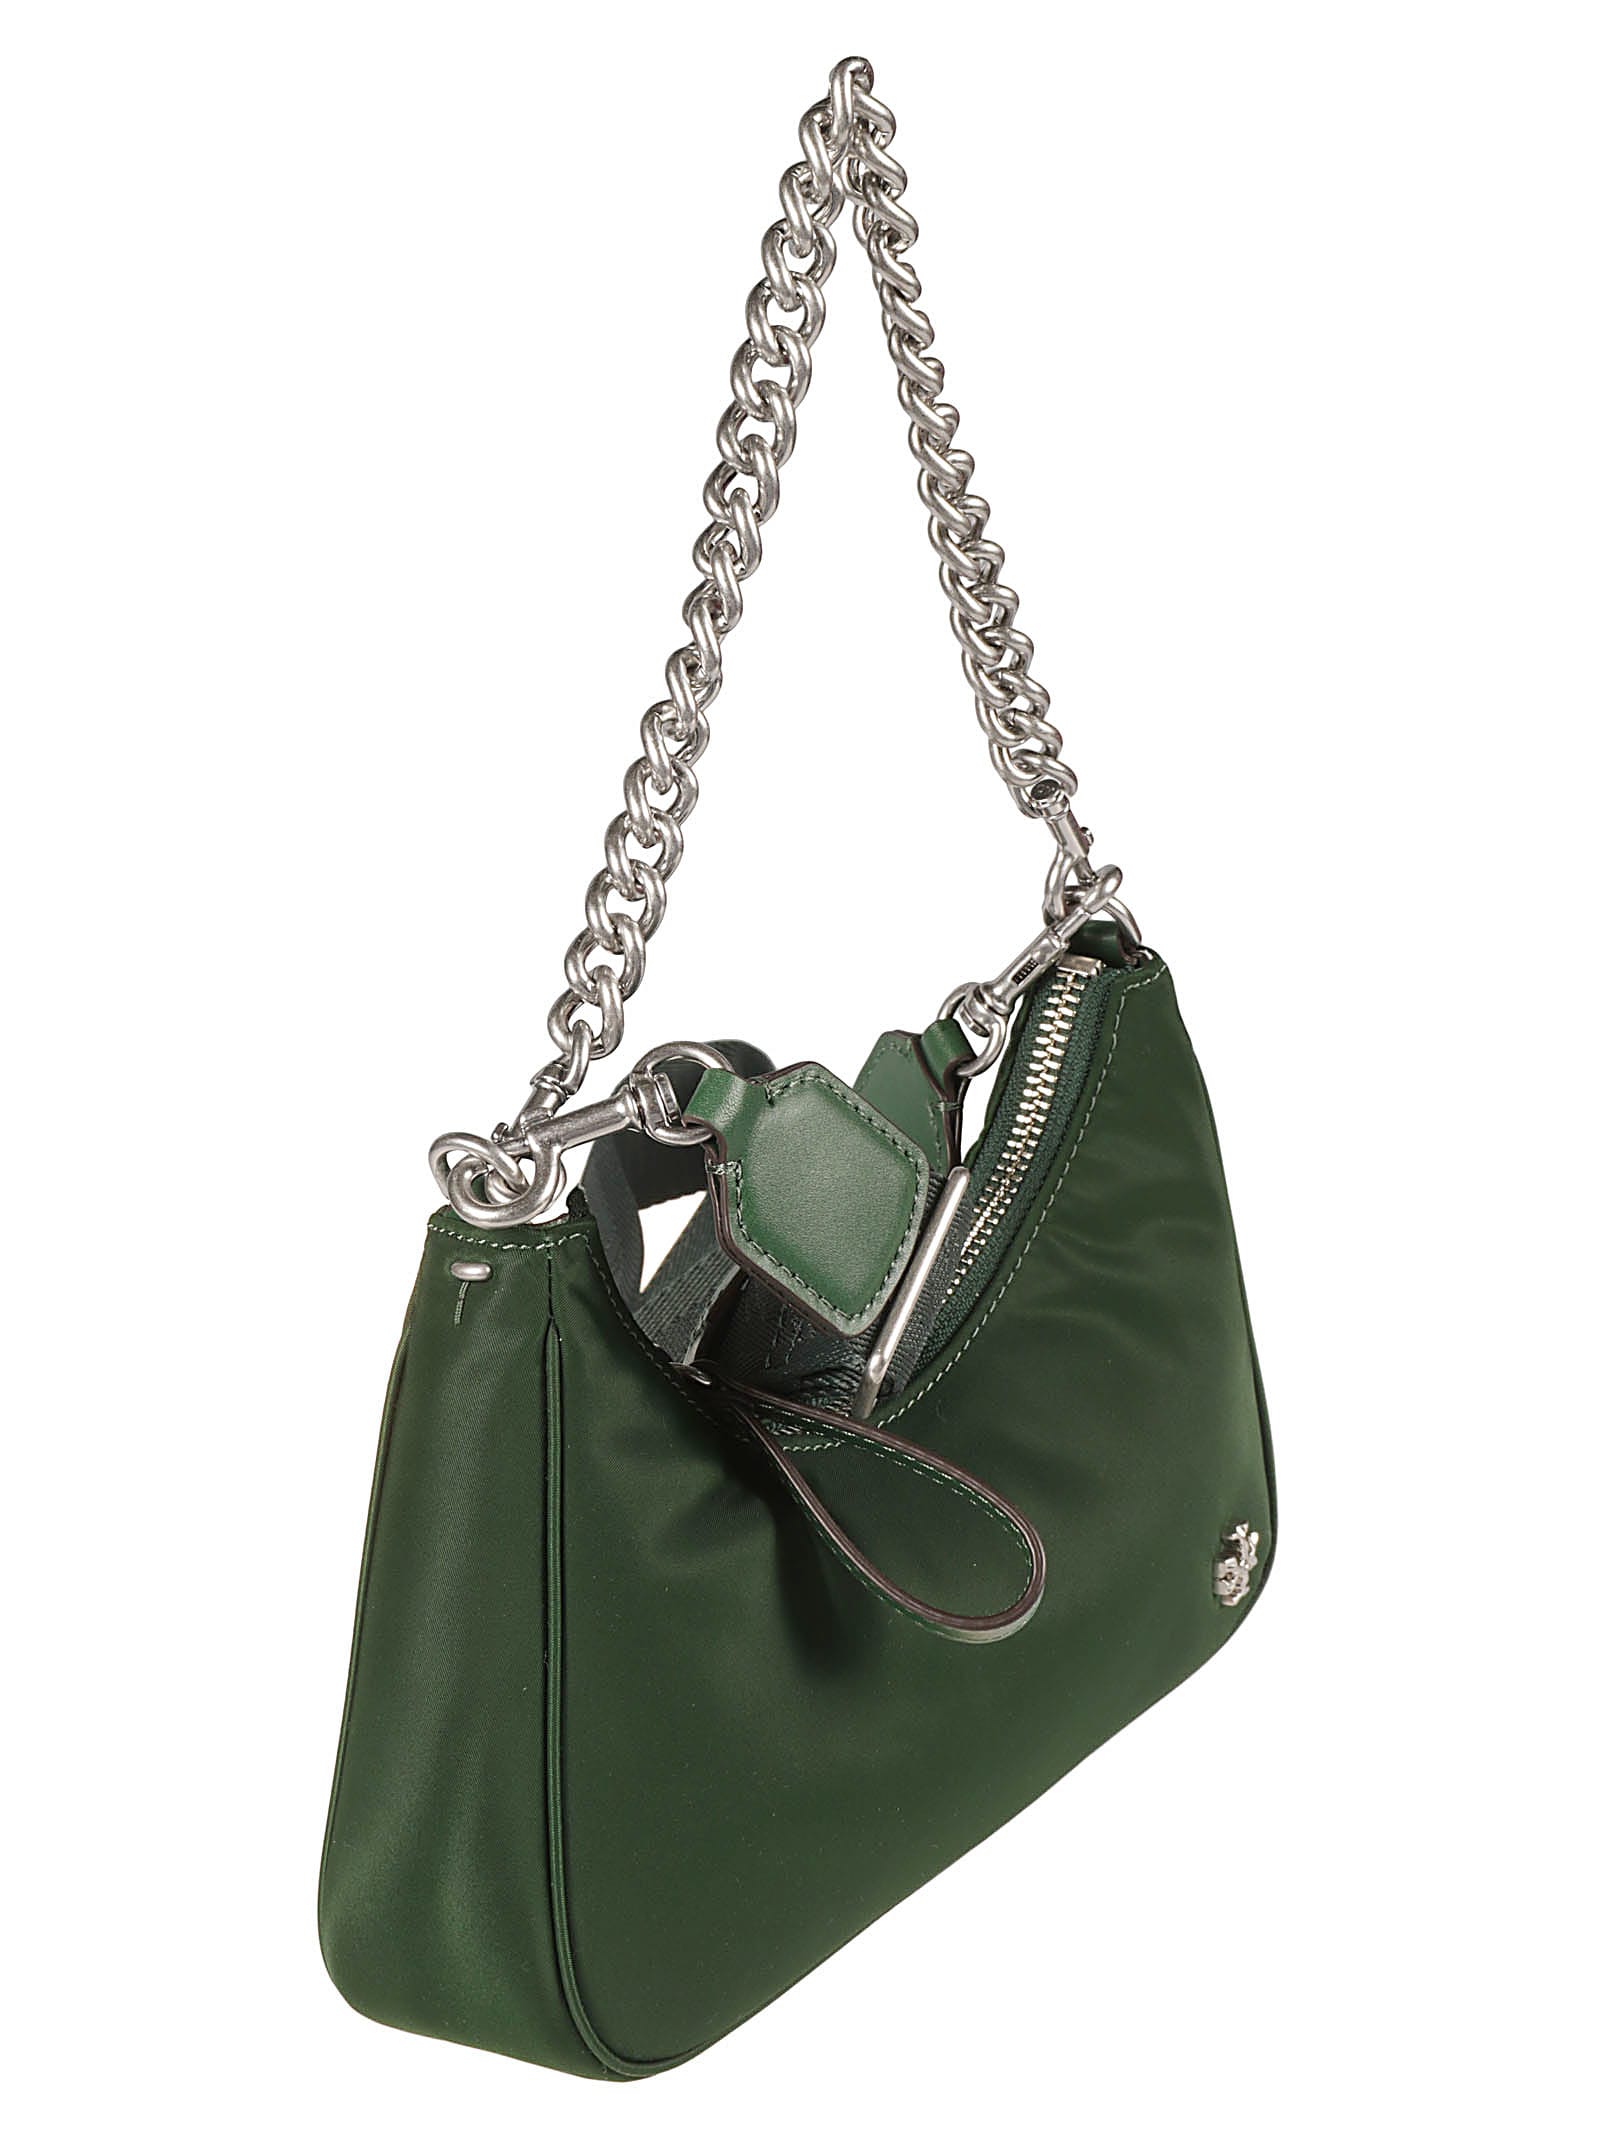 Tory Burch Chain Strap Top Zip Shoulder Bag | italist, ALWAYS LIKE A SALE